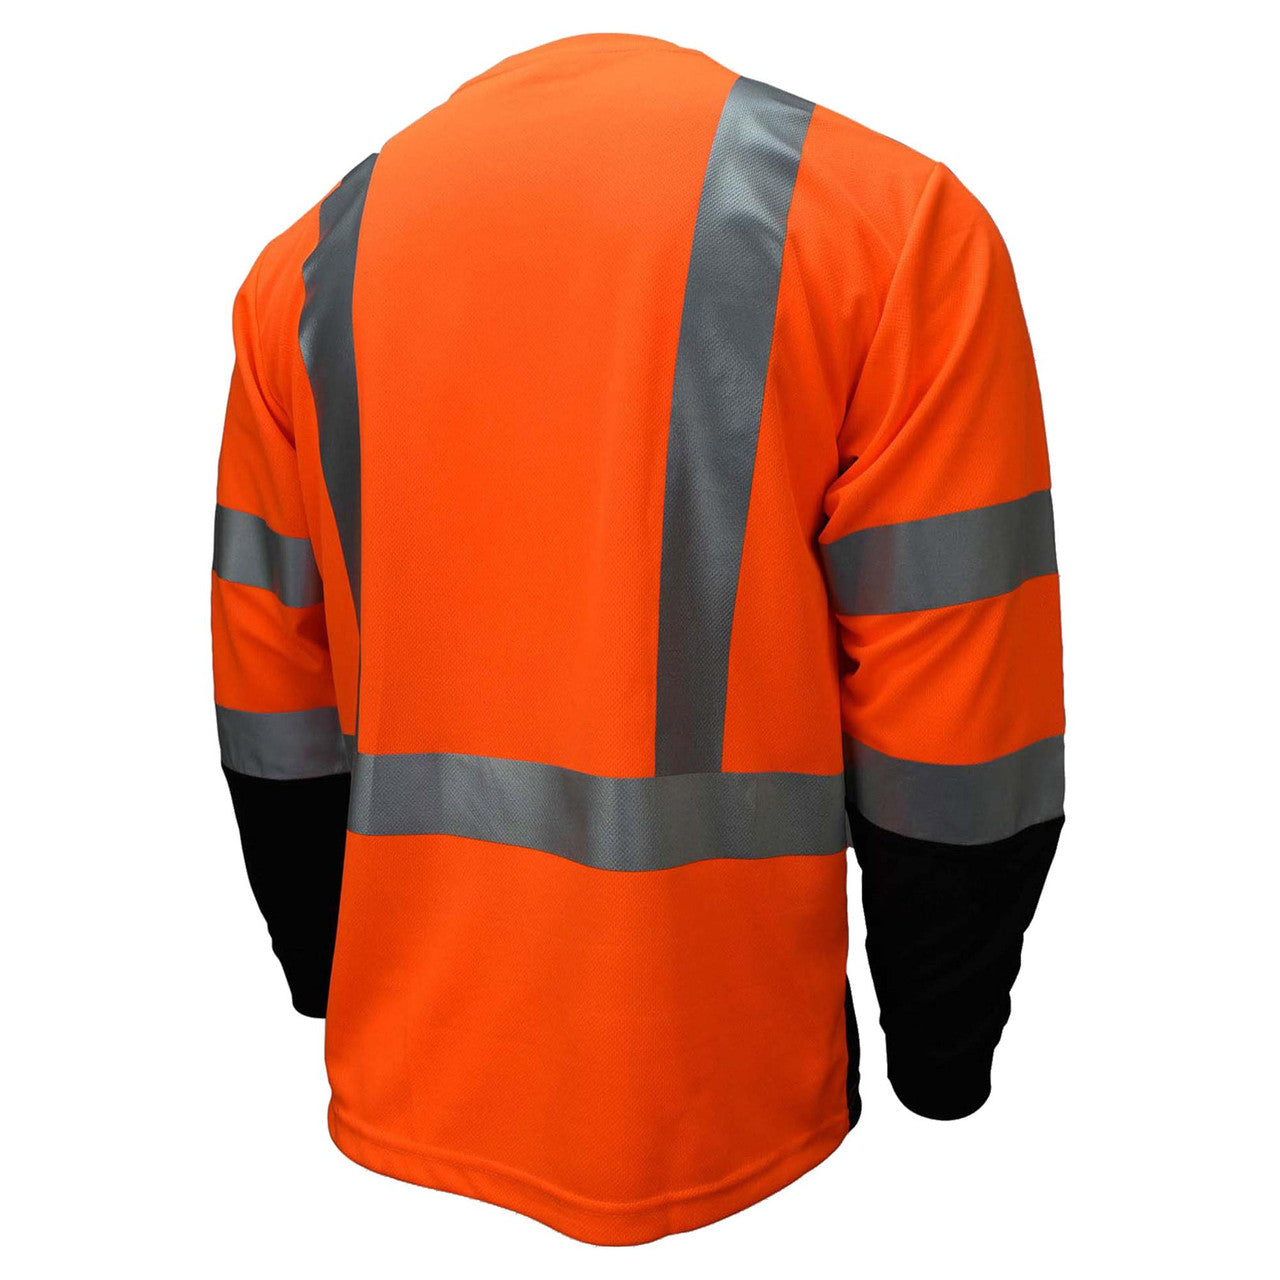 Long Sleeve T-shirt (Orange / Black)